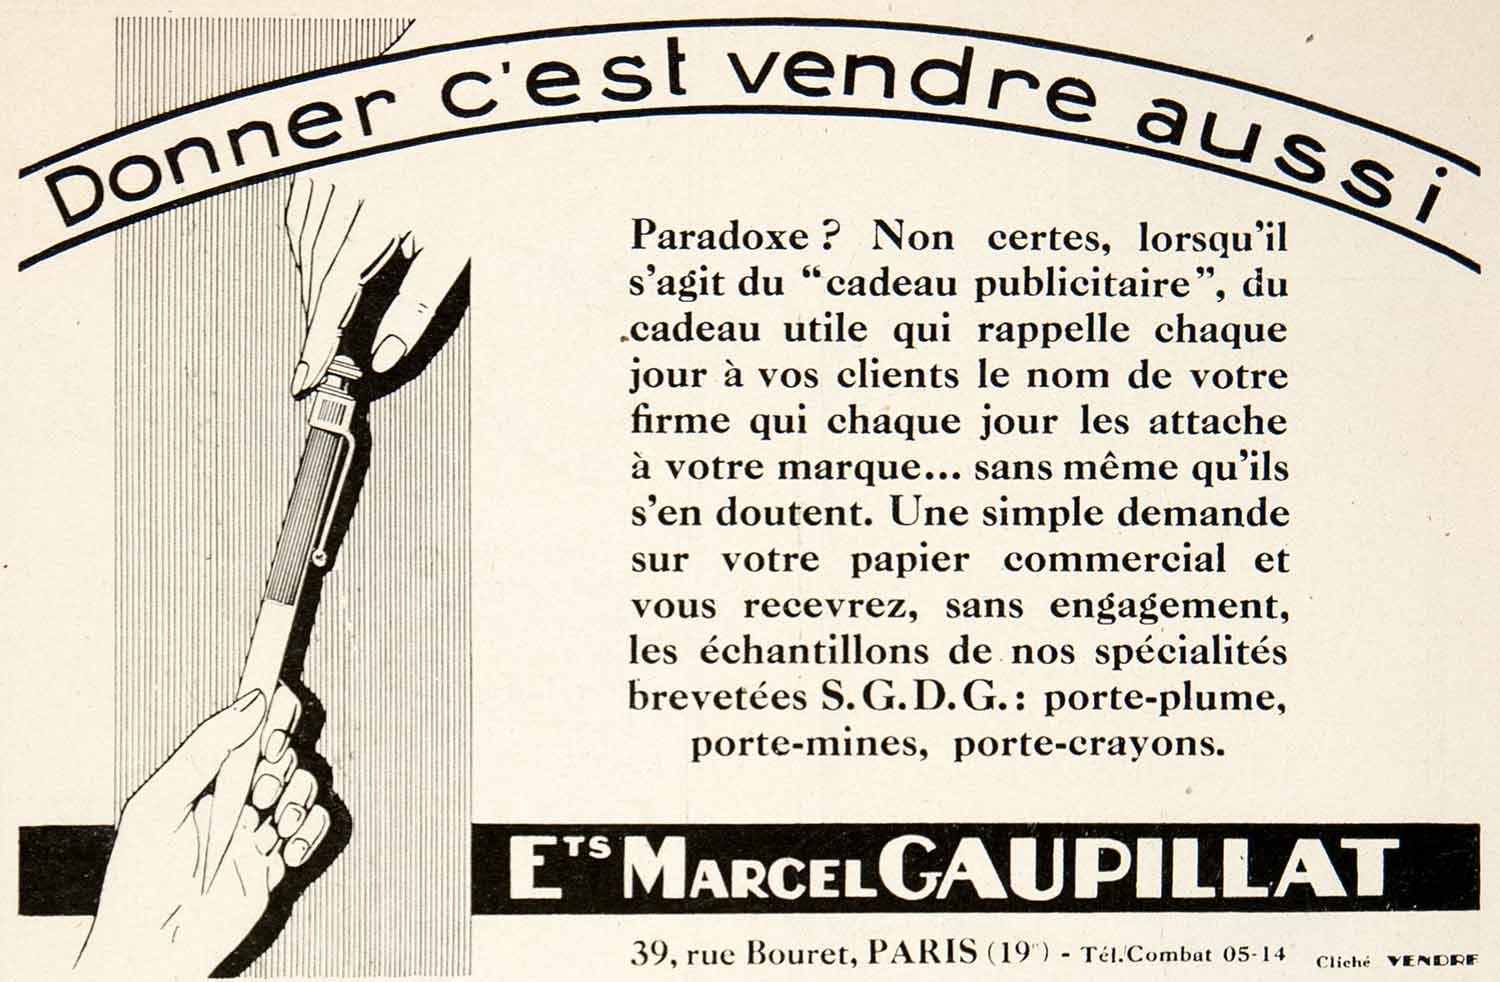 1926 Ad Marcel Gaupillat 39 Rue Bouret Paris Marketing Advertising Pen VEN4